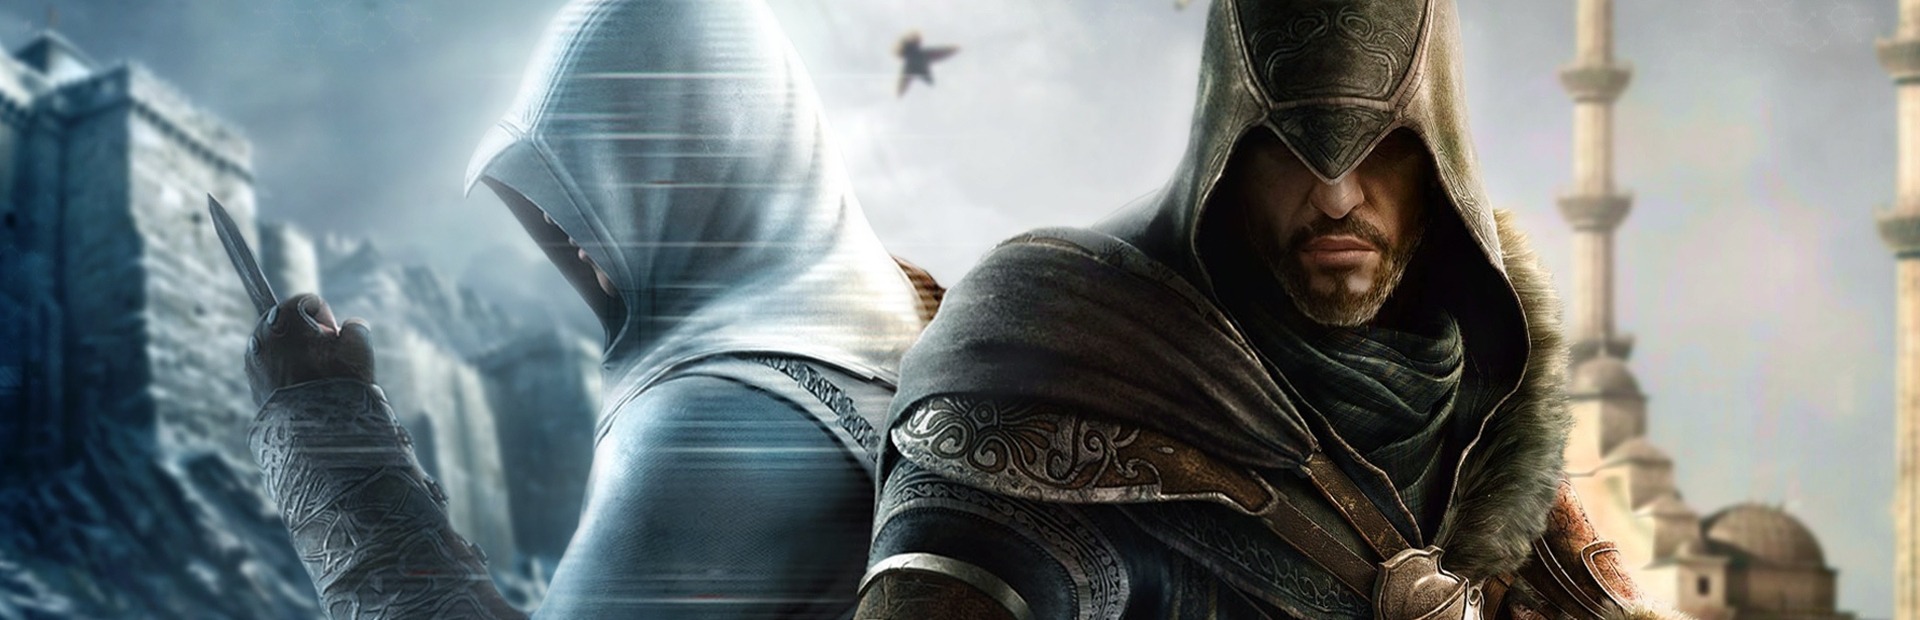 Assassin’s Creed Rift